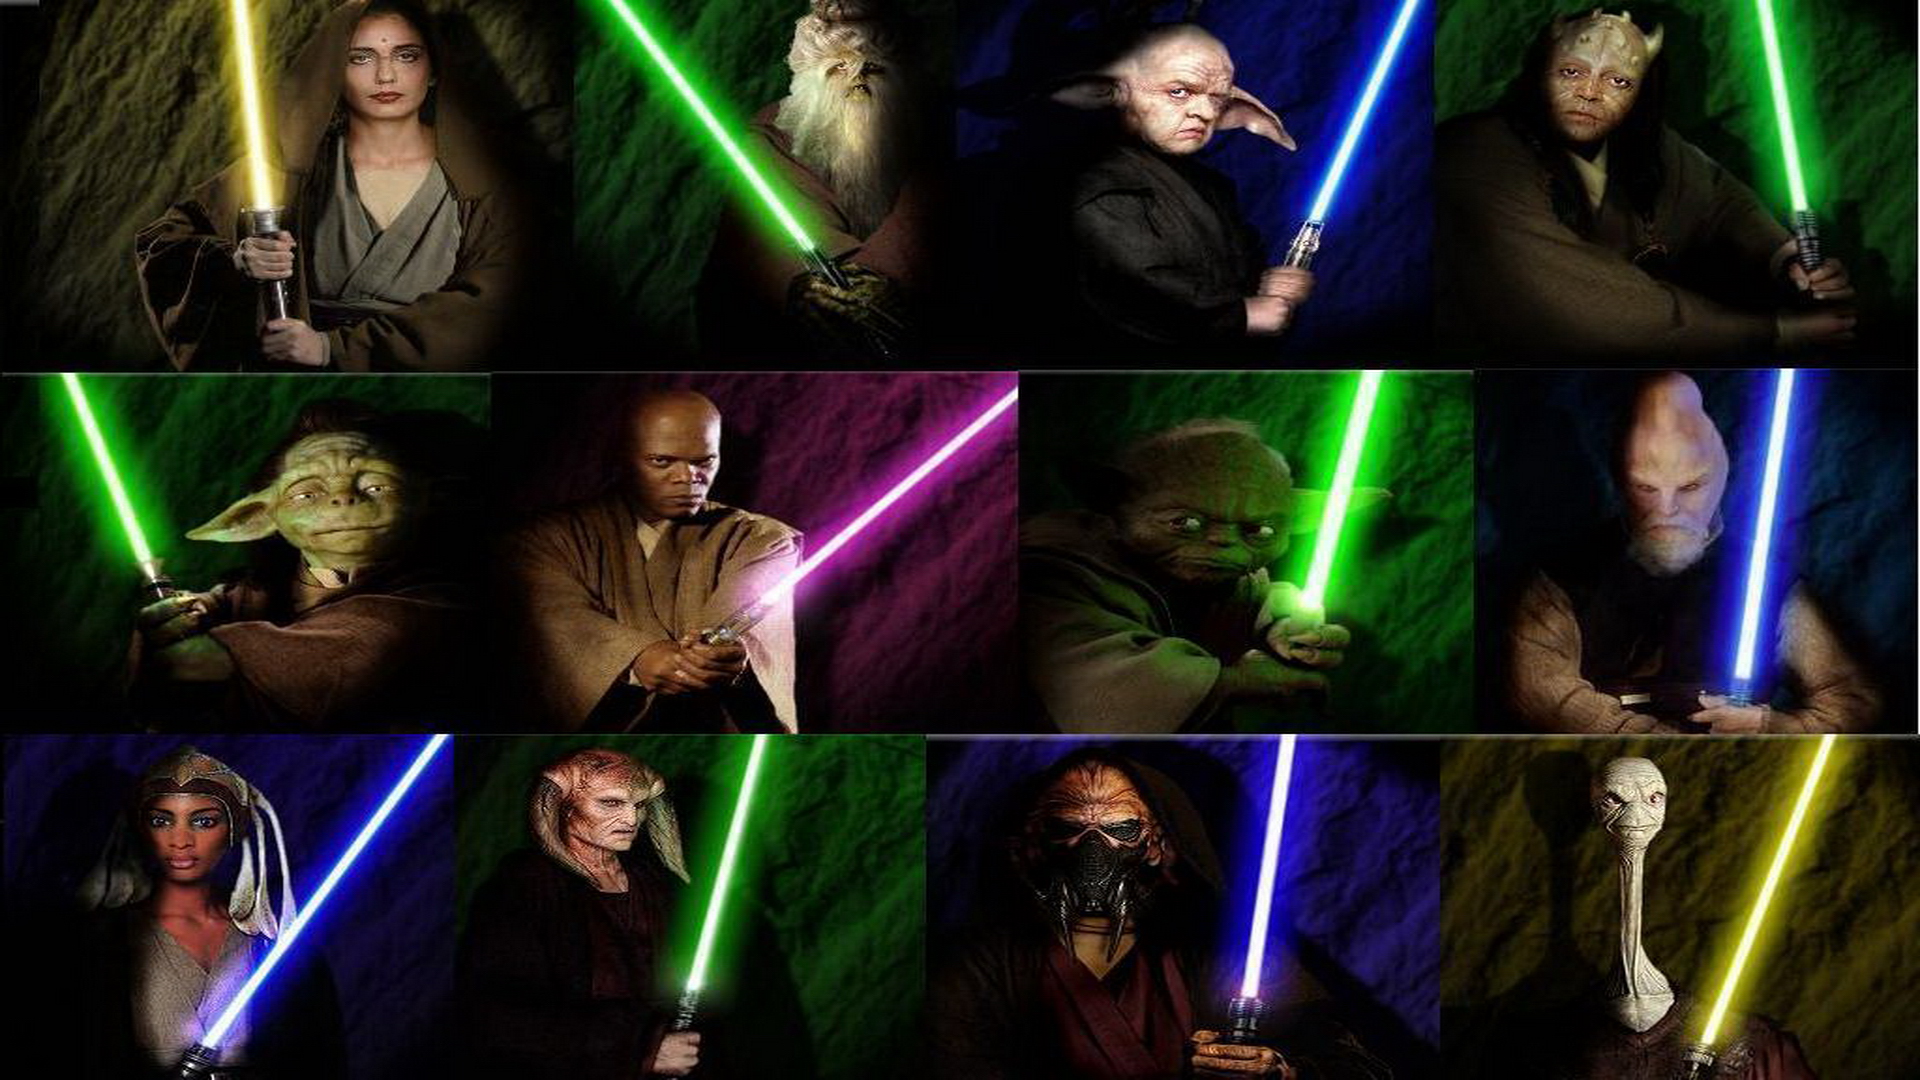 The Jedi Council star wars 2884888 Wallpaper Star Wars Wallpapers